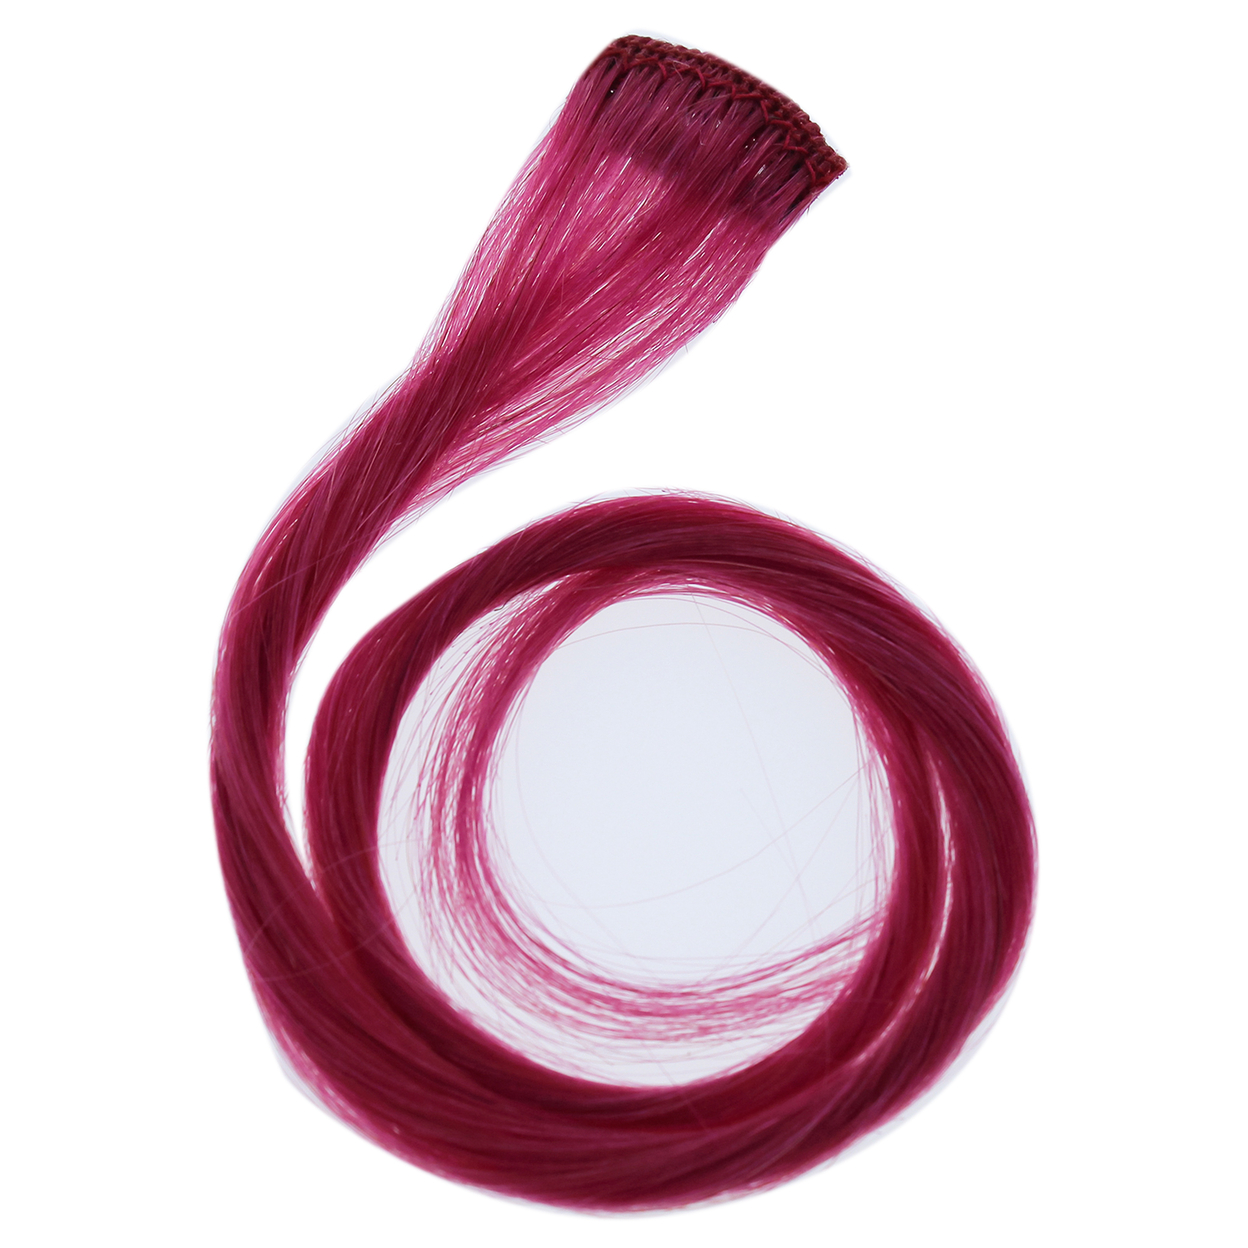 Hairdo Human Hair Color Strip - Pink 16 Inch